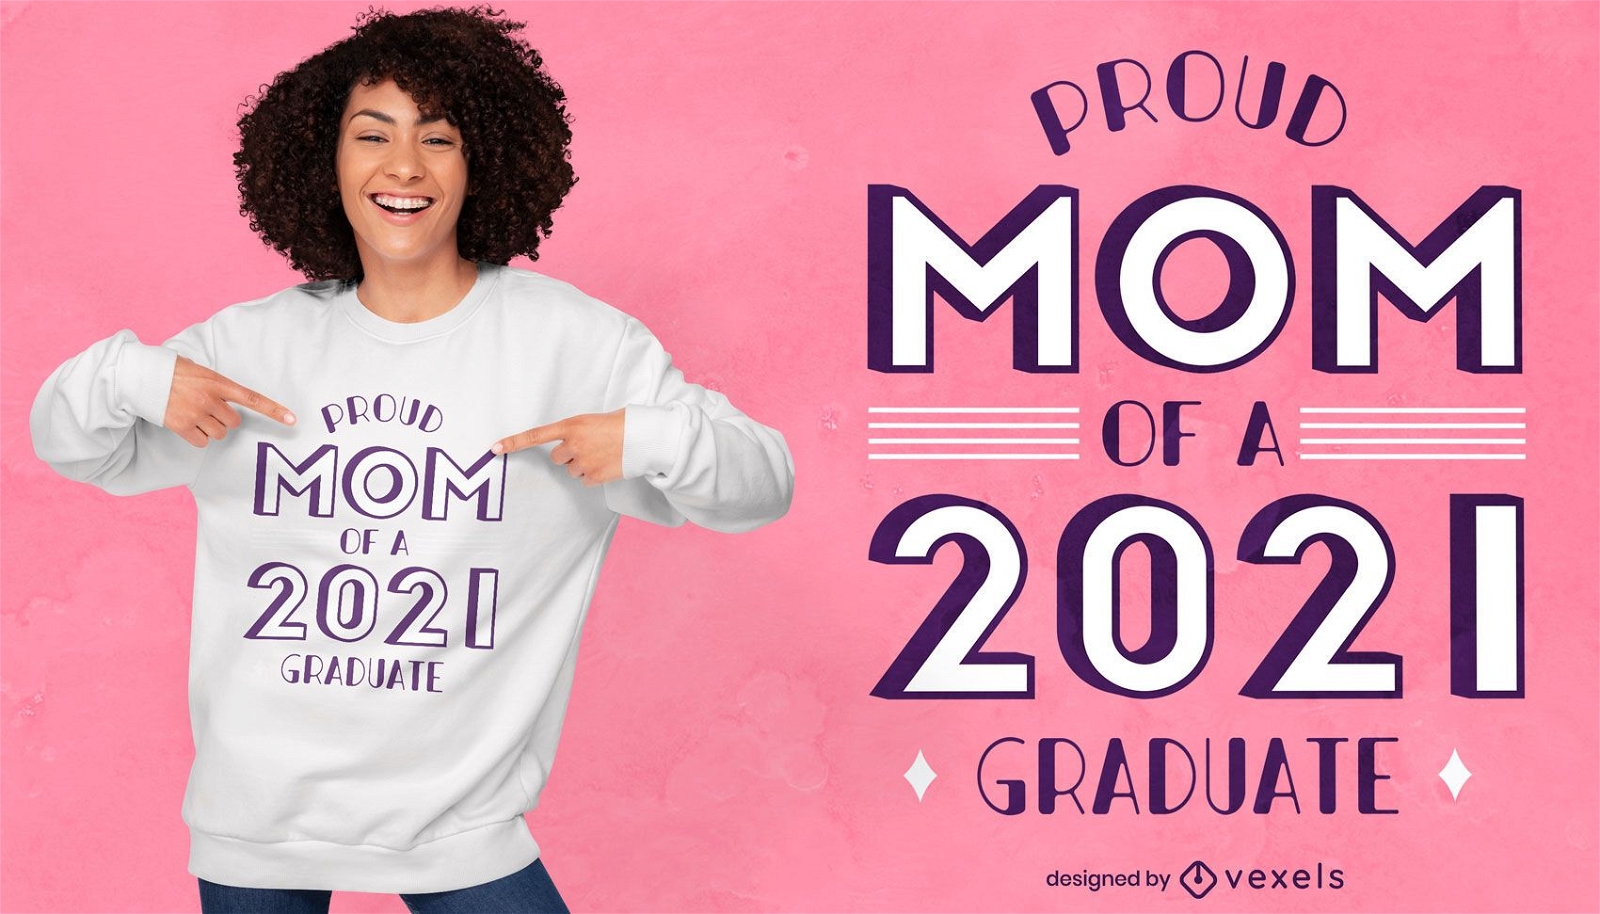 Diseño de camiseta de graduado mamá de 2021